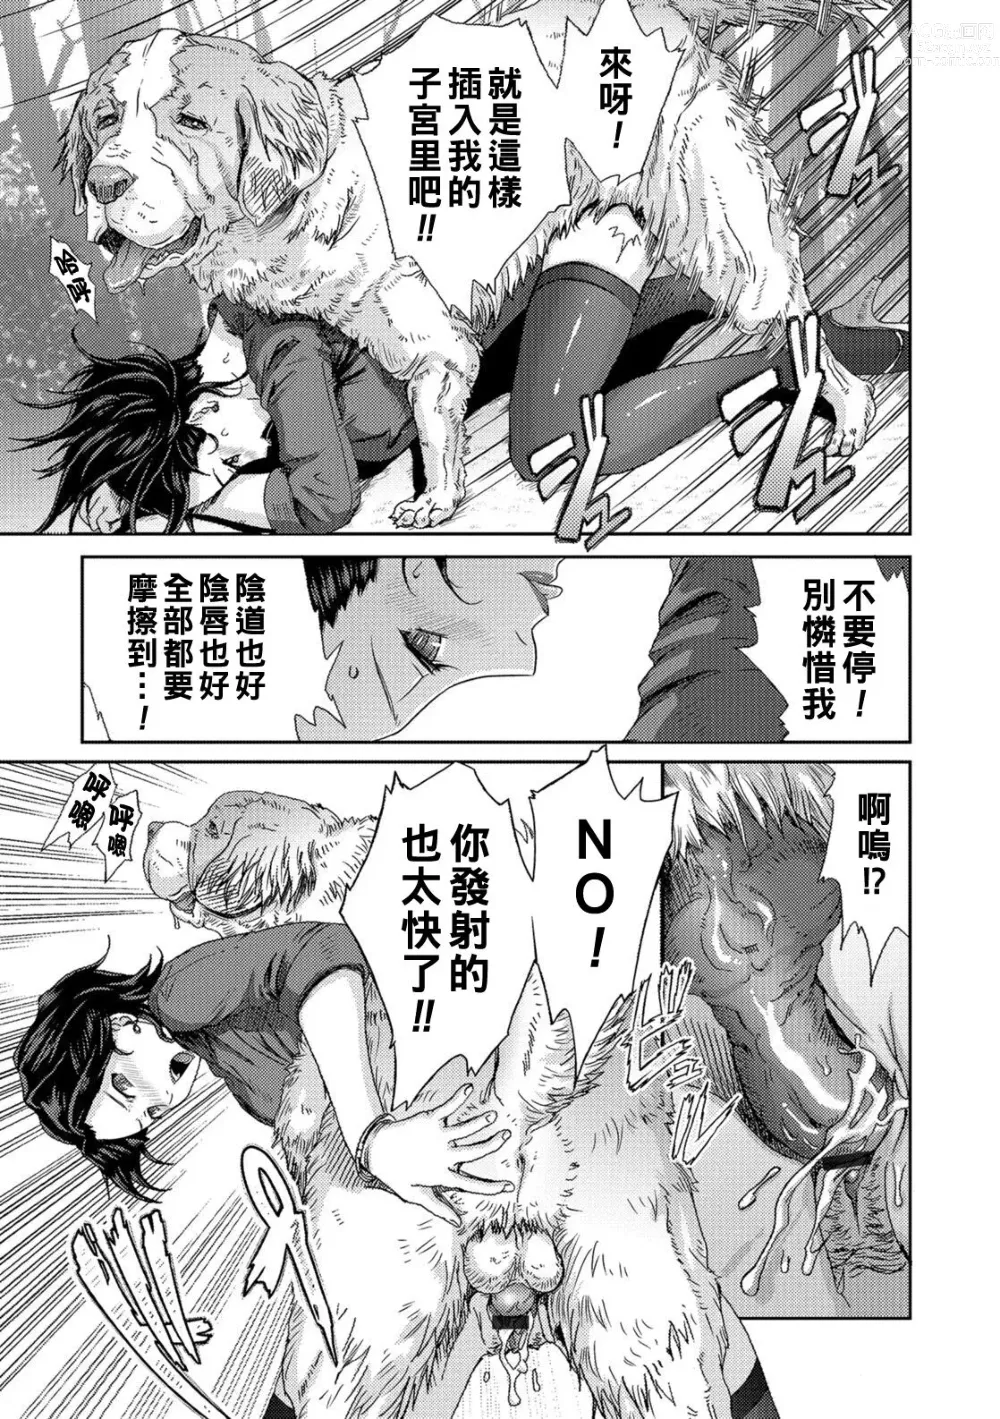 Page 7 of manga Honoguraki Mori no Reizoku -The SUIT and DOG-